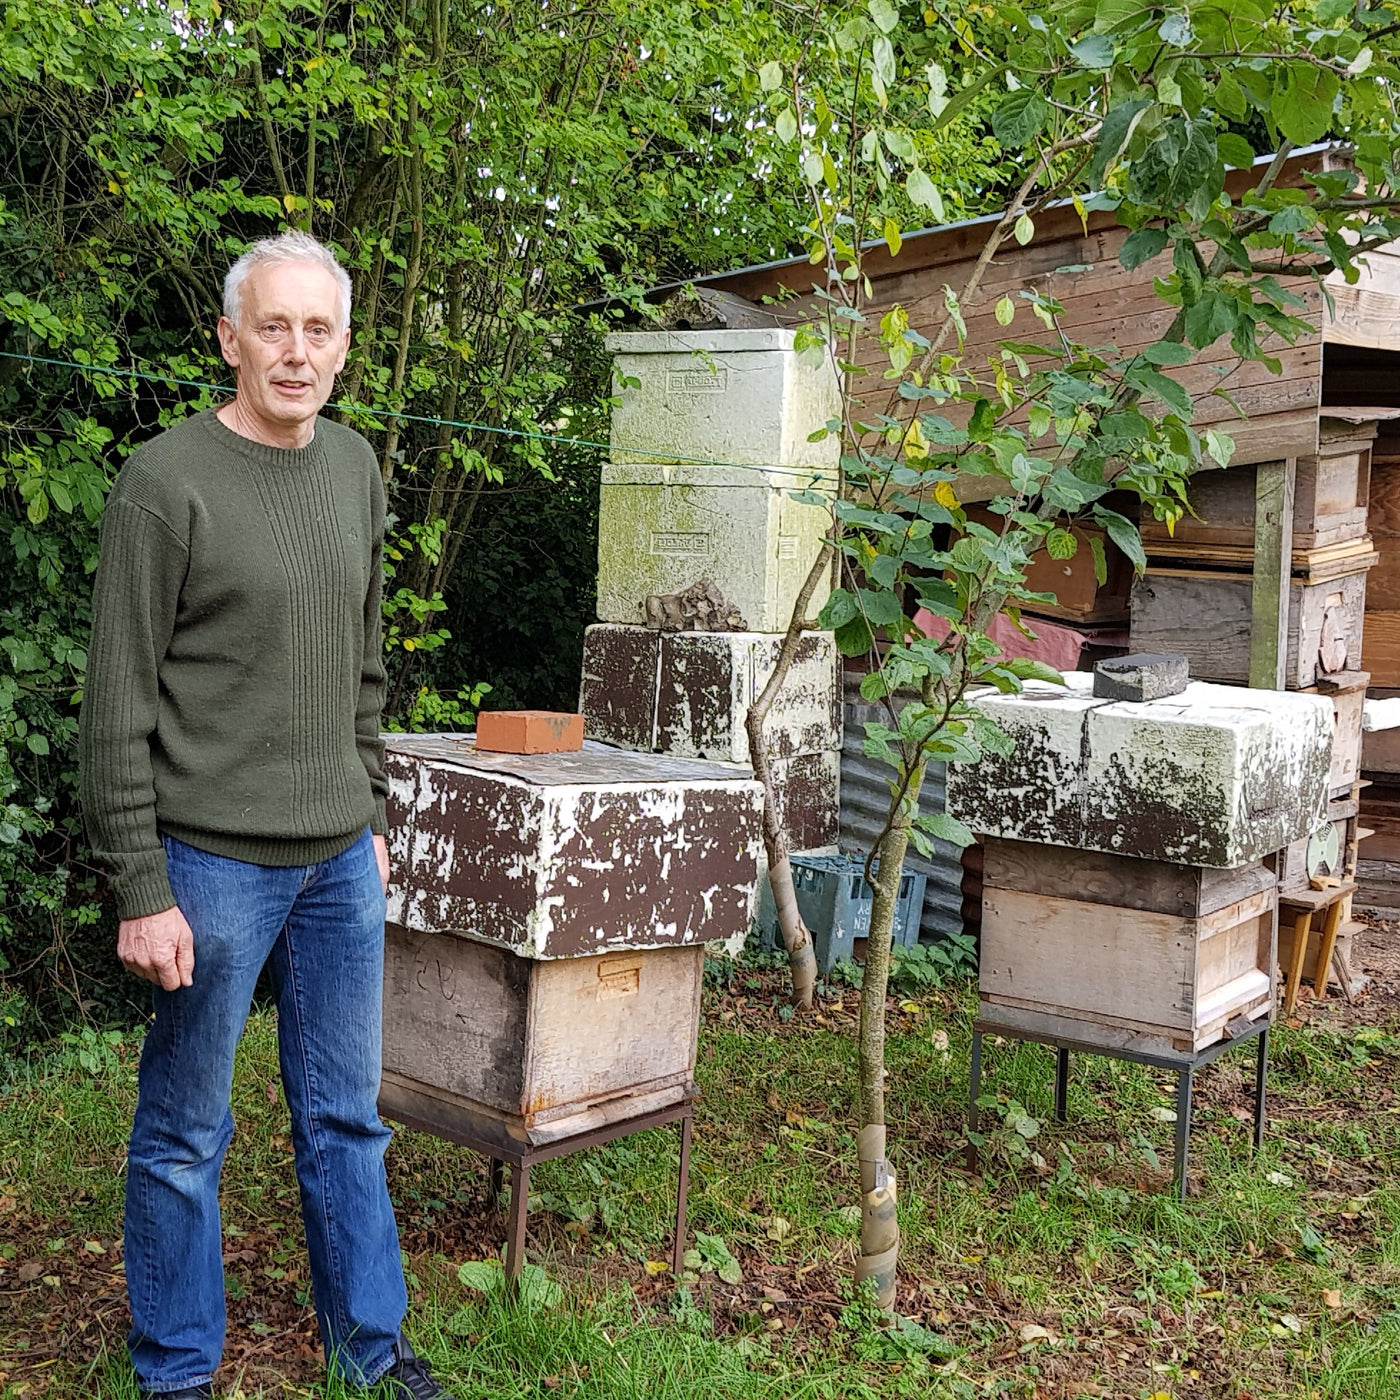 Honey from a garden, Gaverstone, Norfolk